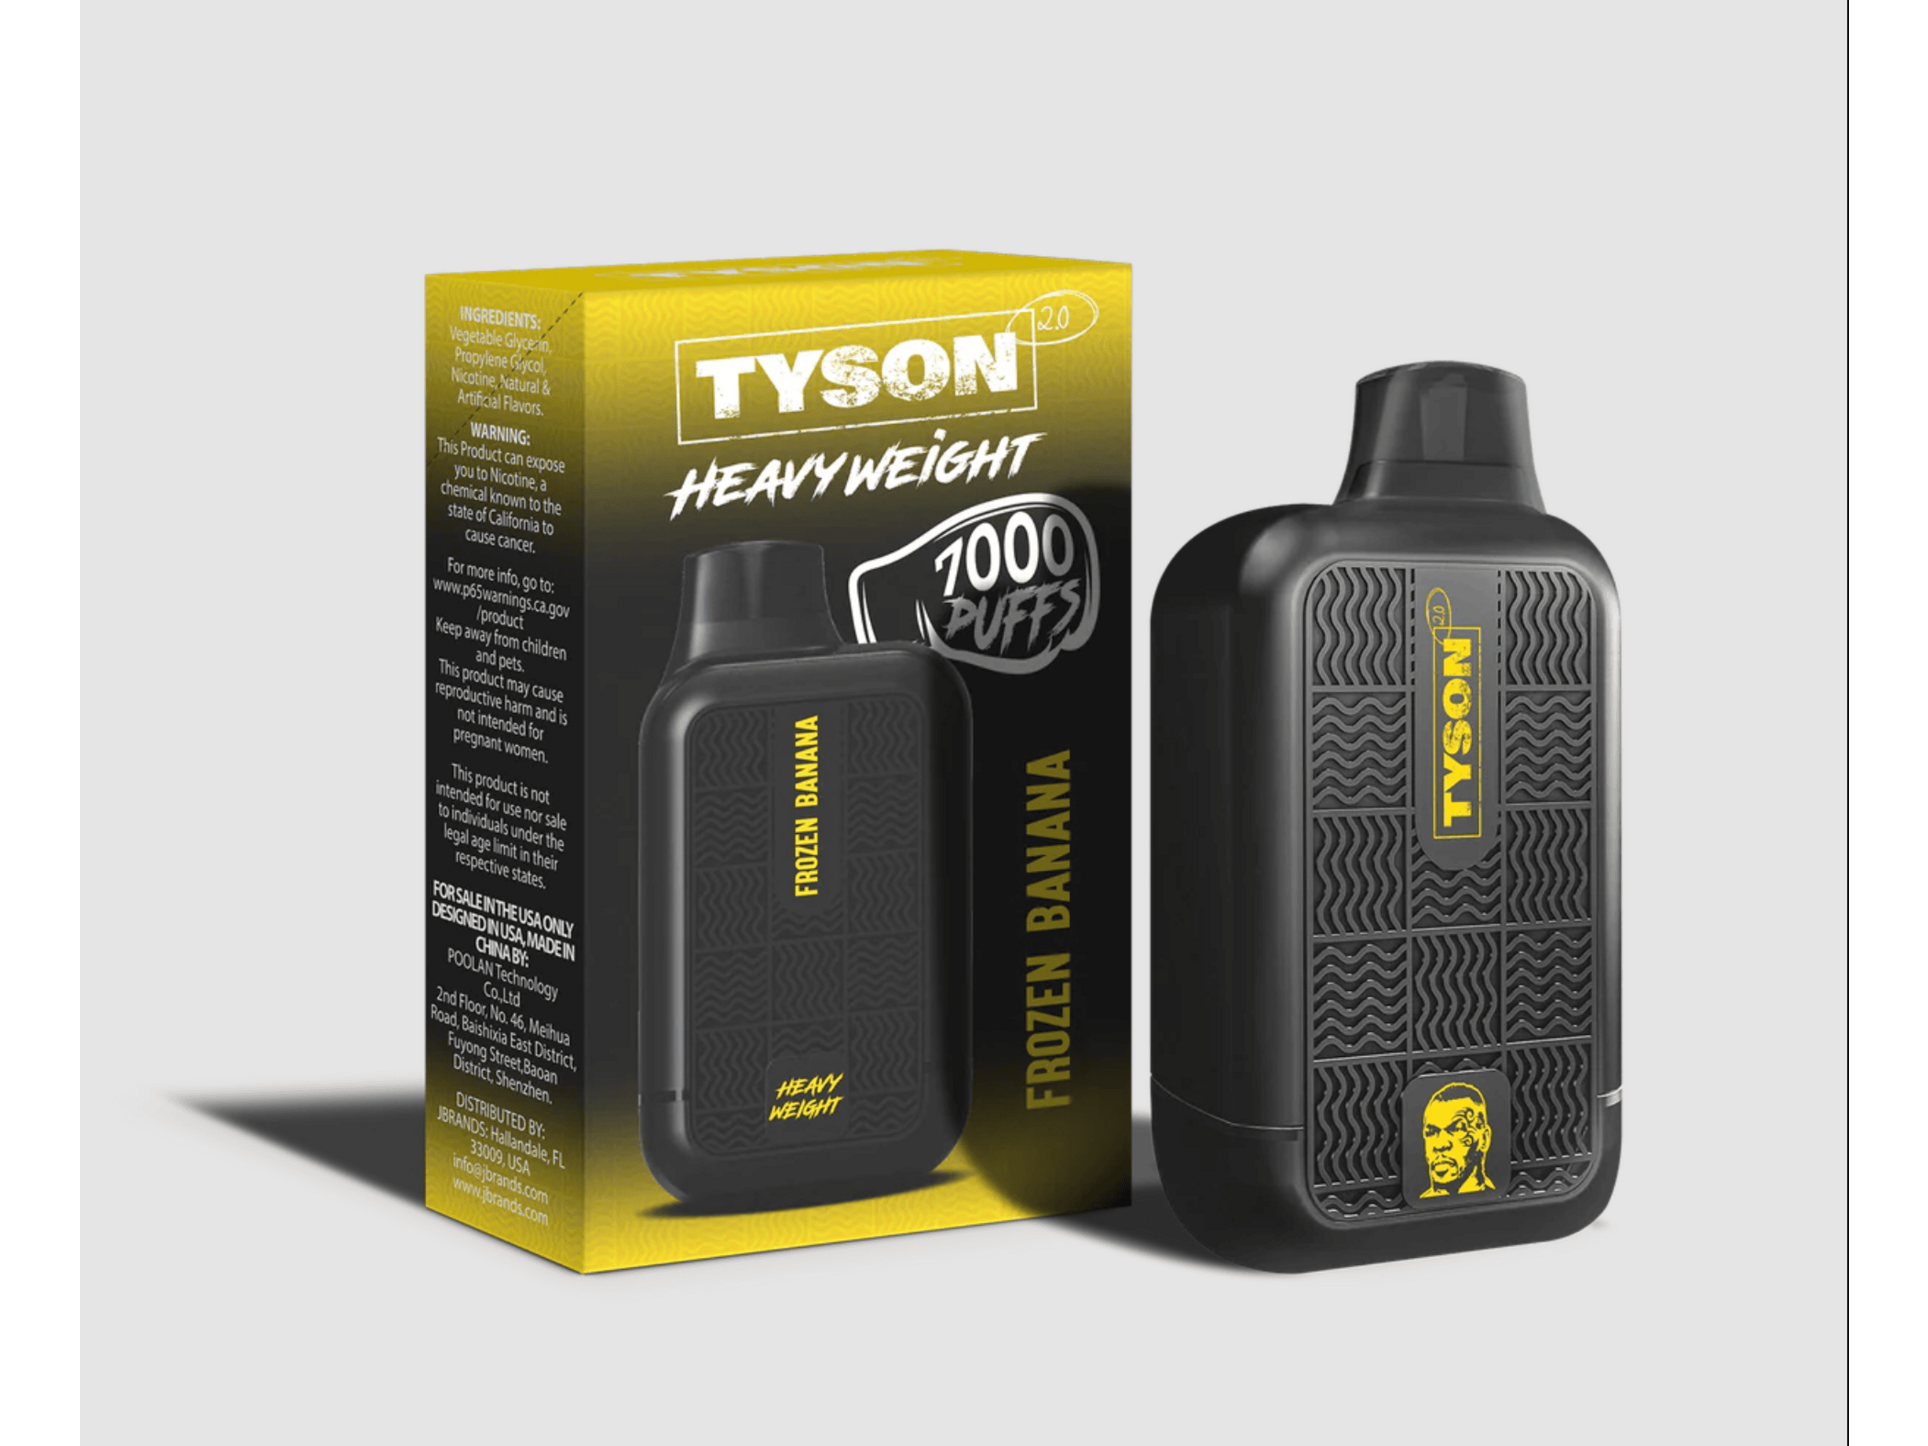 Tyson Heavyweight Frozen Banana flavored disposable vape device and box